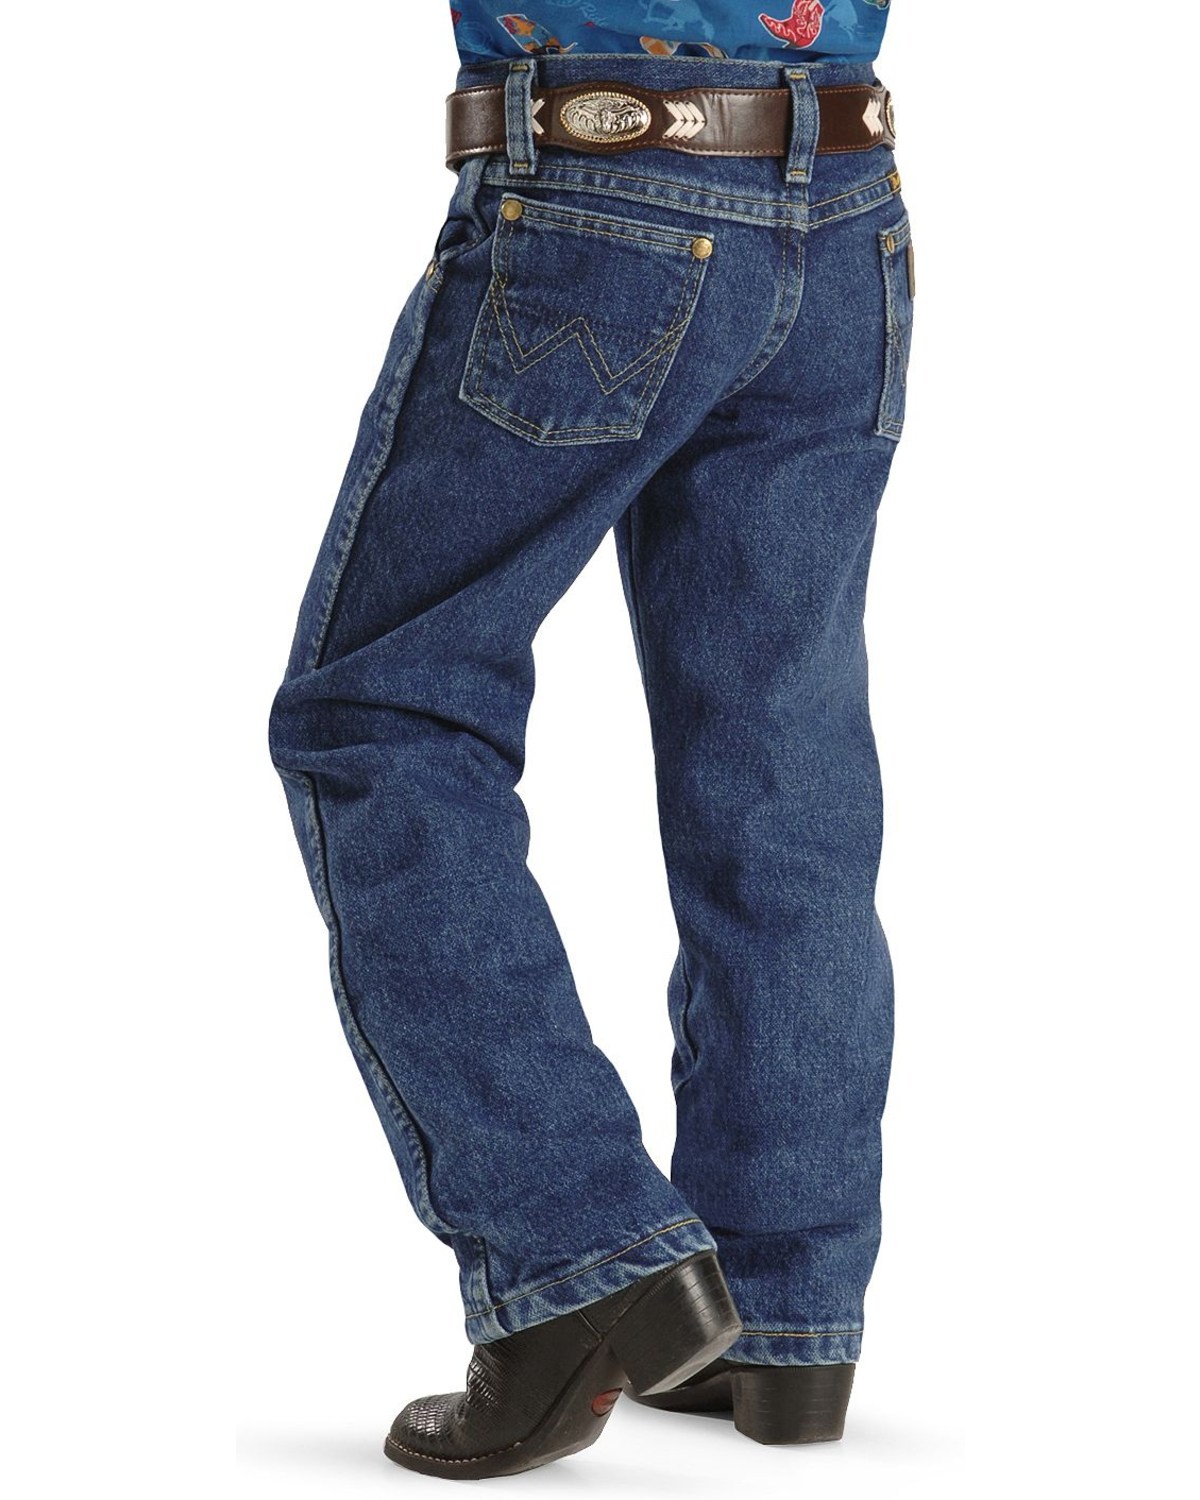 George Strait by Wrangler Boy's Jeans 